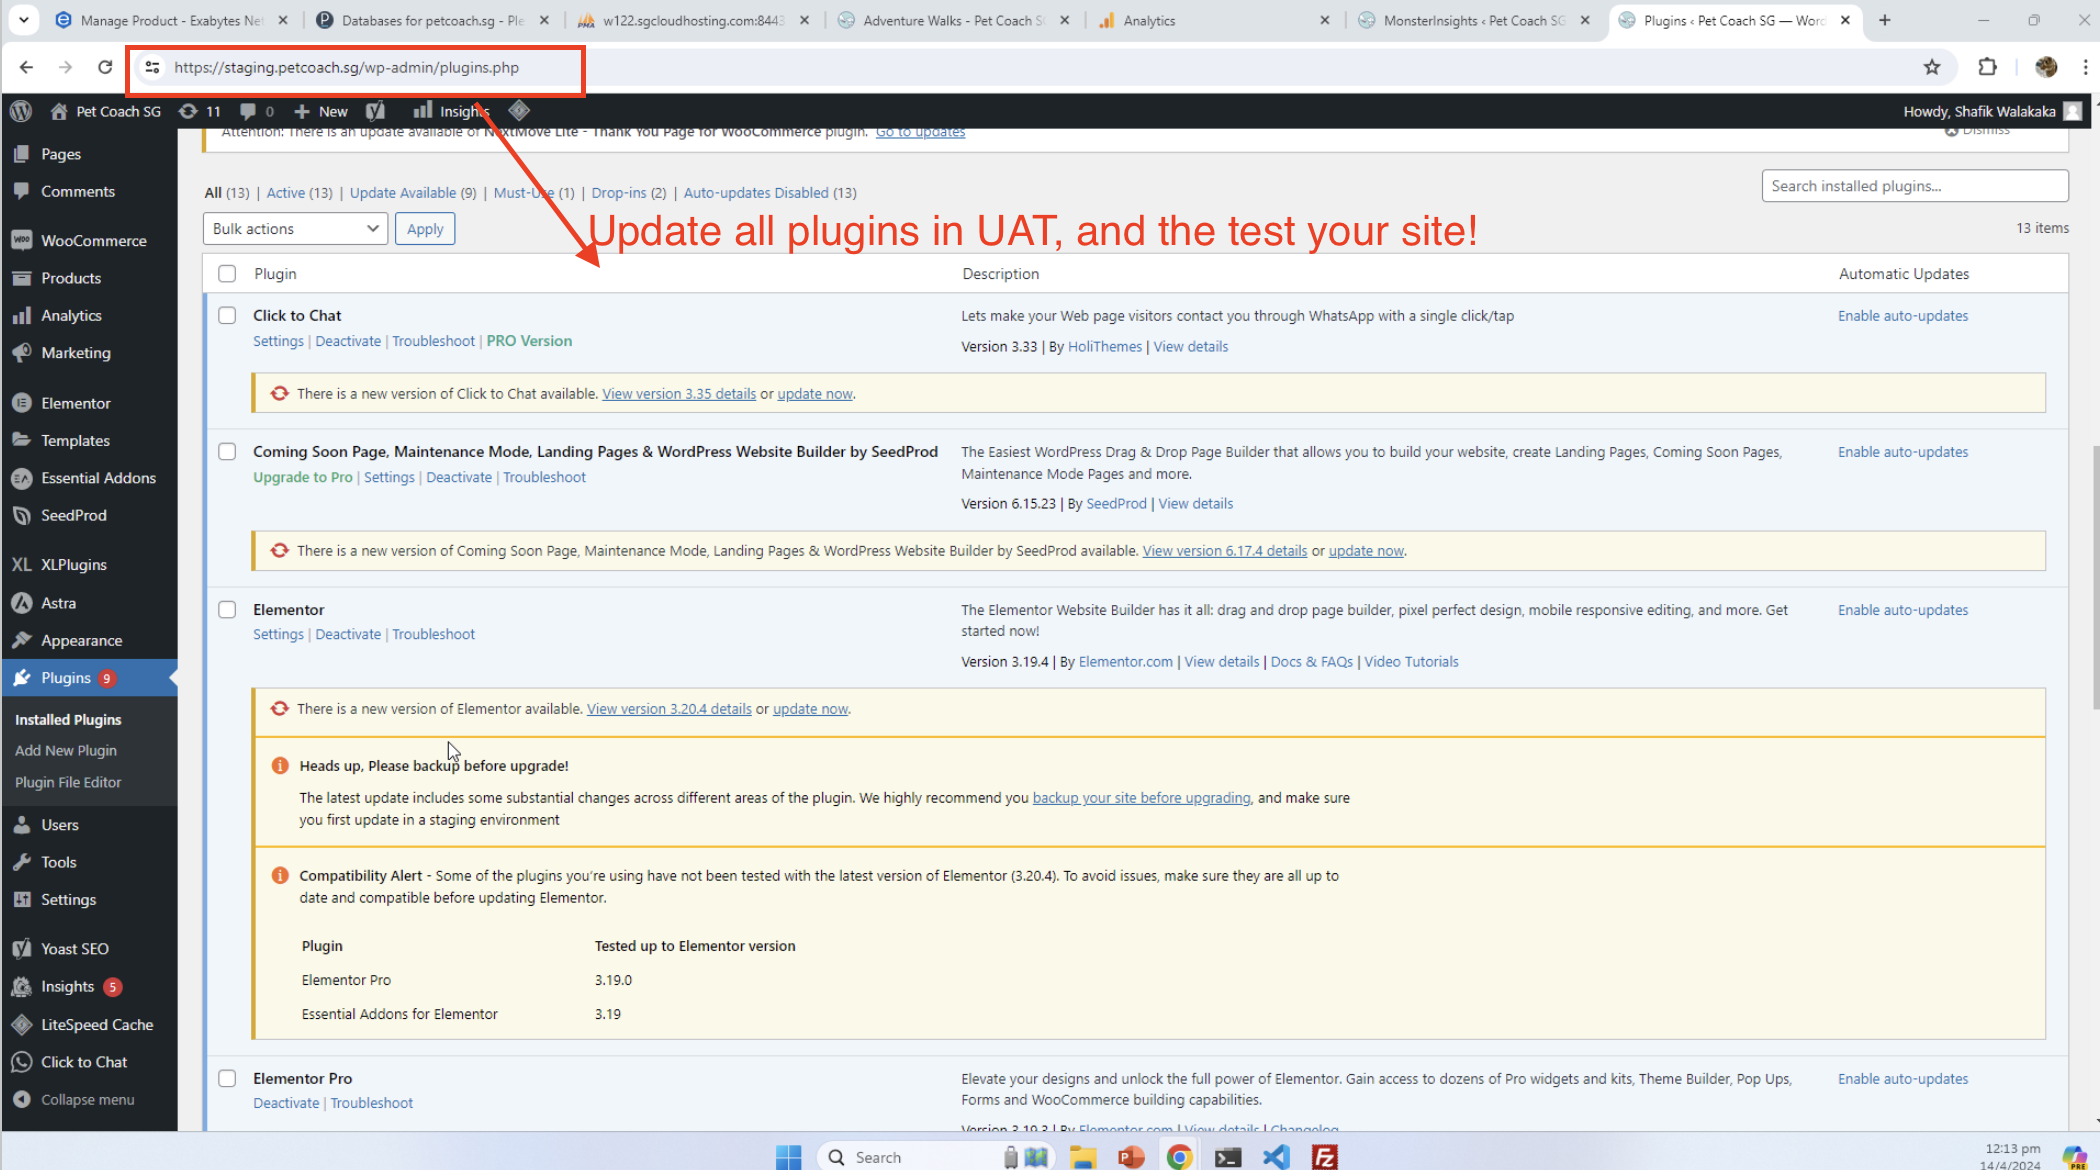 image of updating plugins in UAT